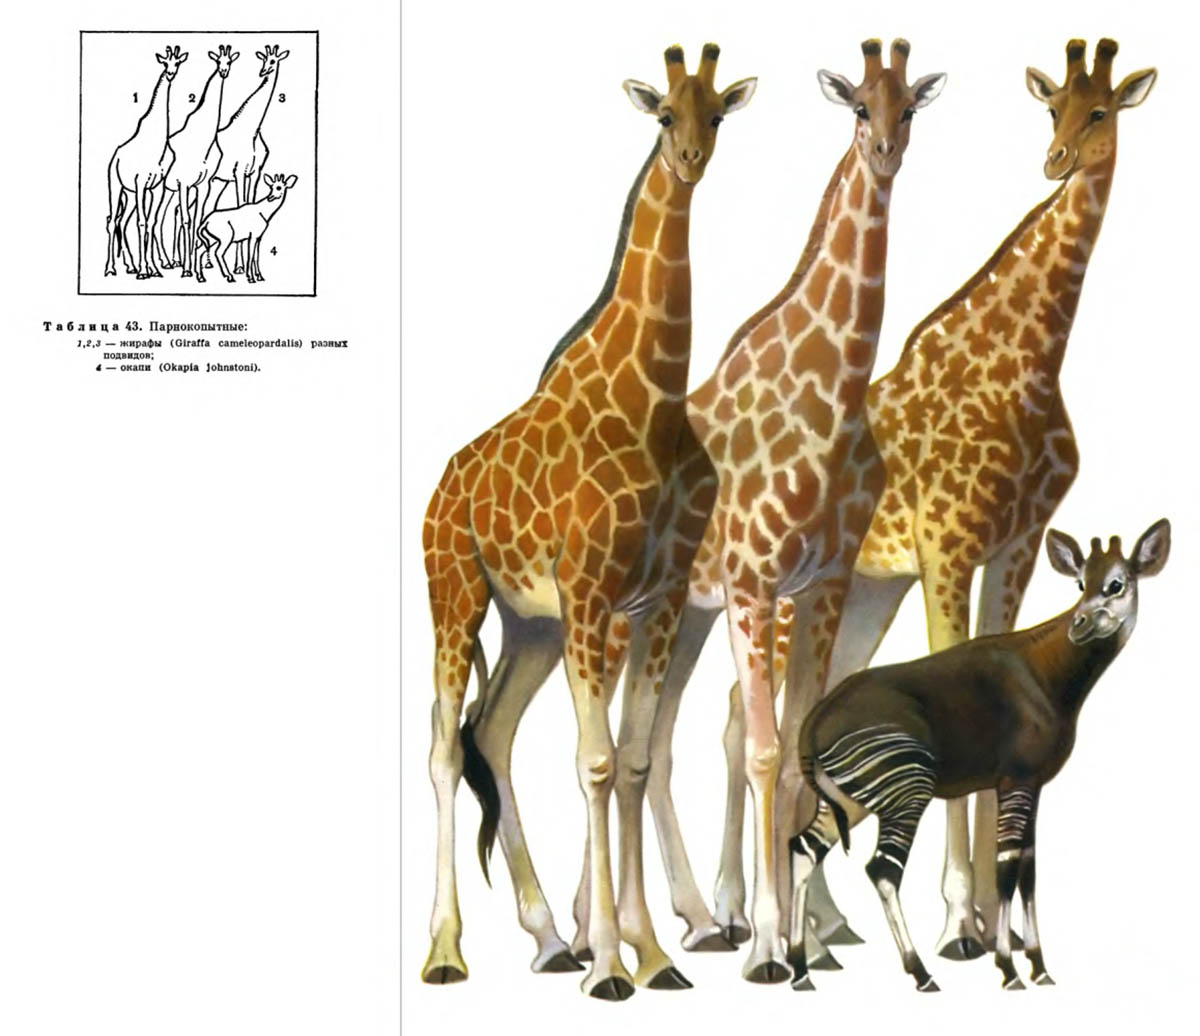 Okapi and giraffe